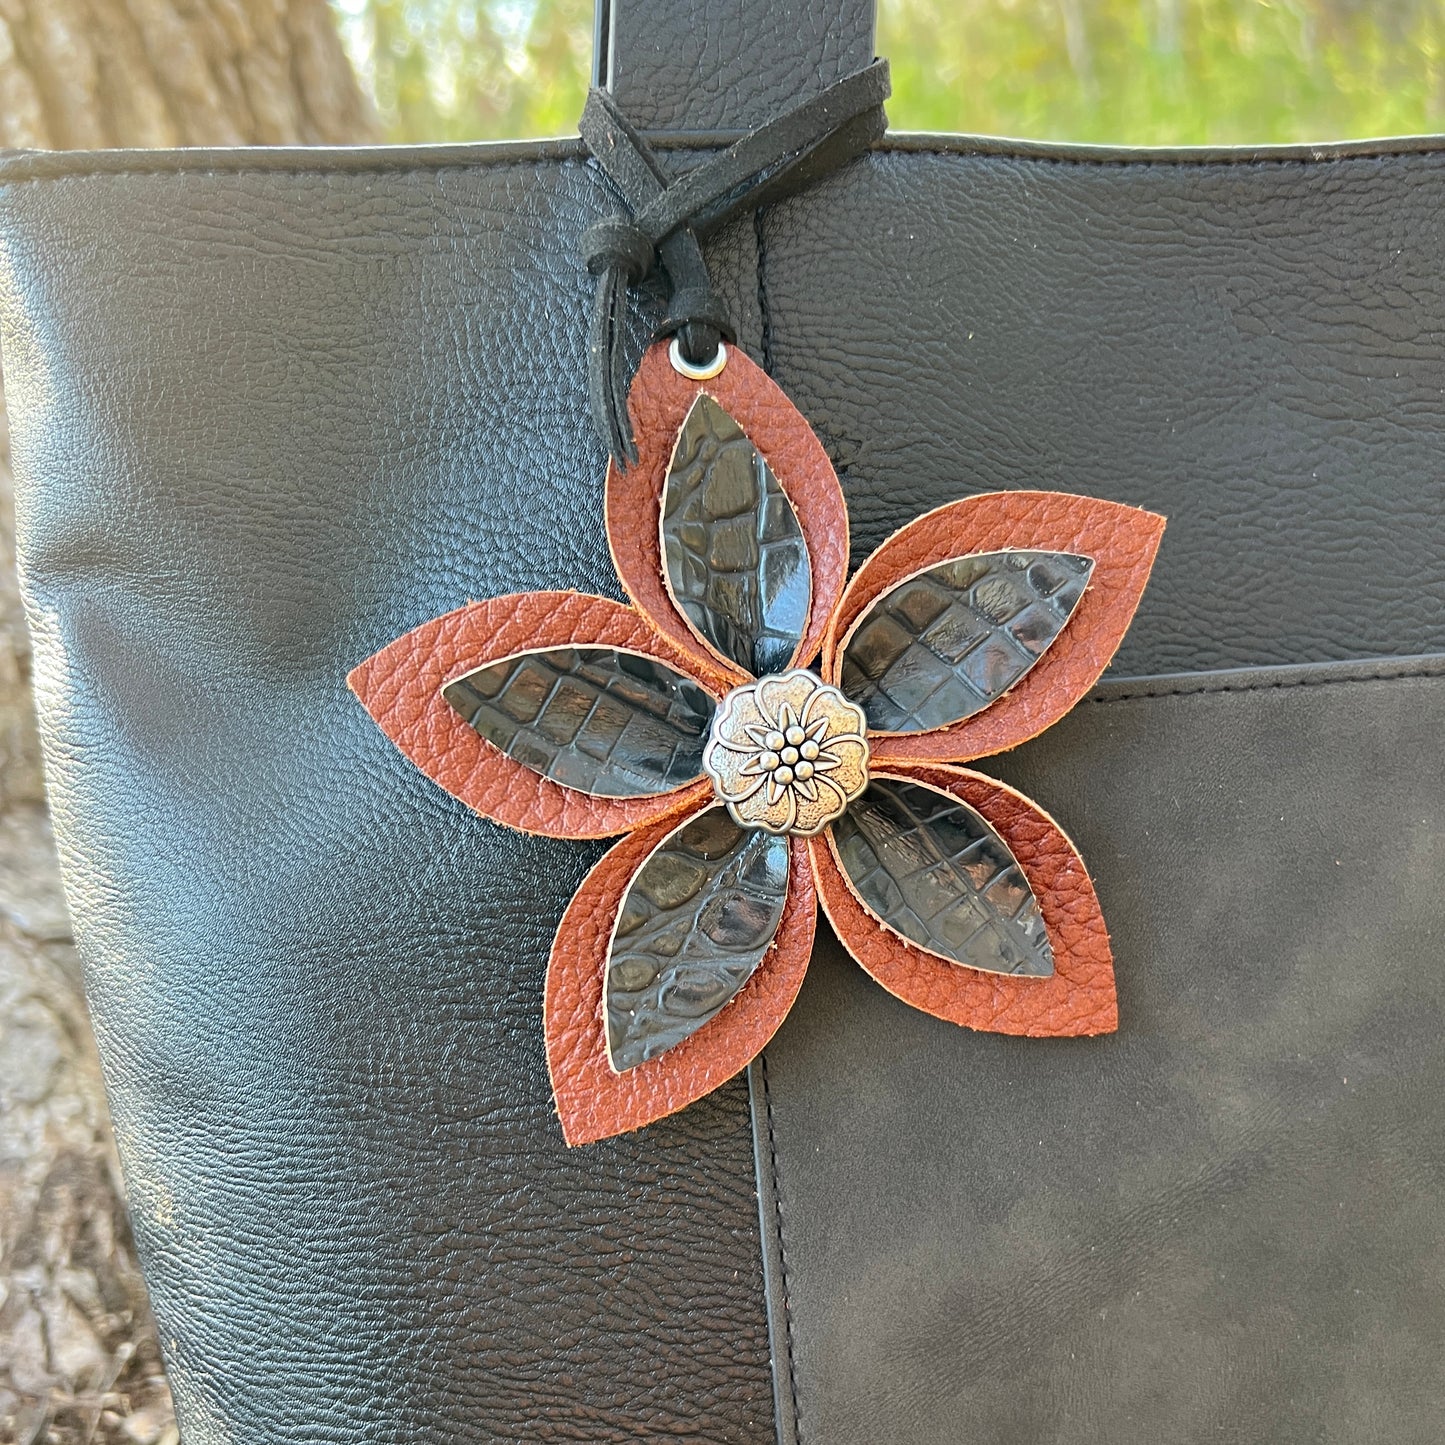 Leather Flower Bag Charm - Large Flower with Loop -Black Croc on Brown